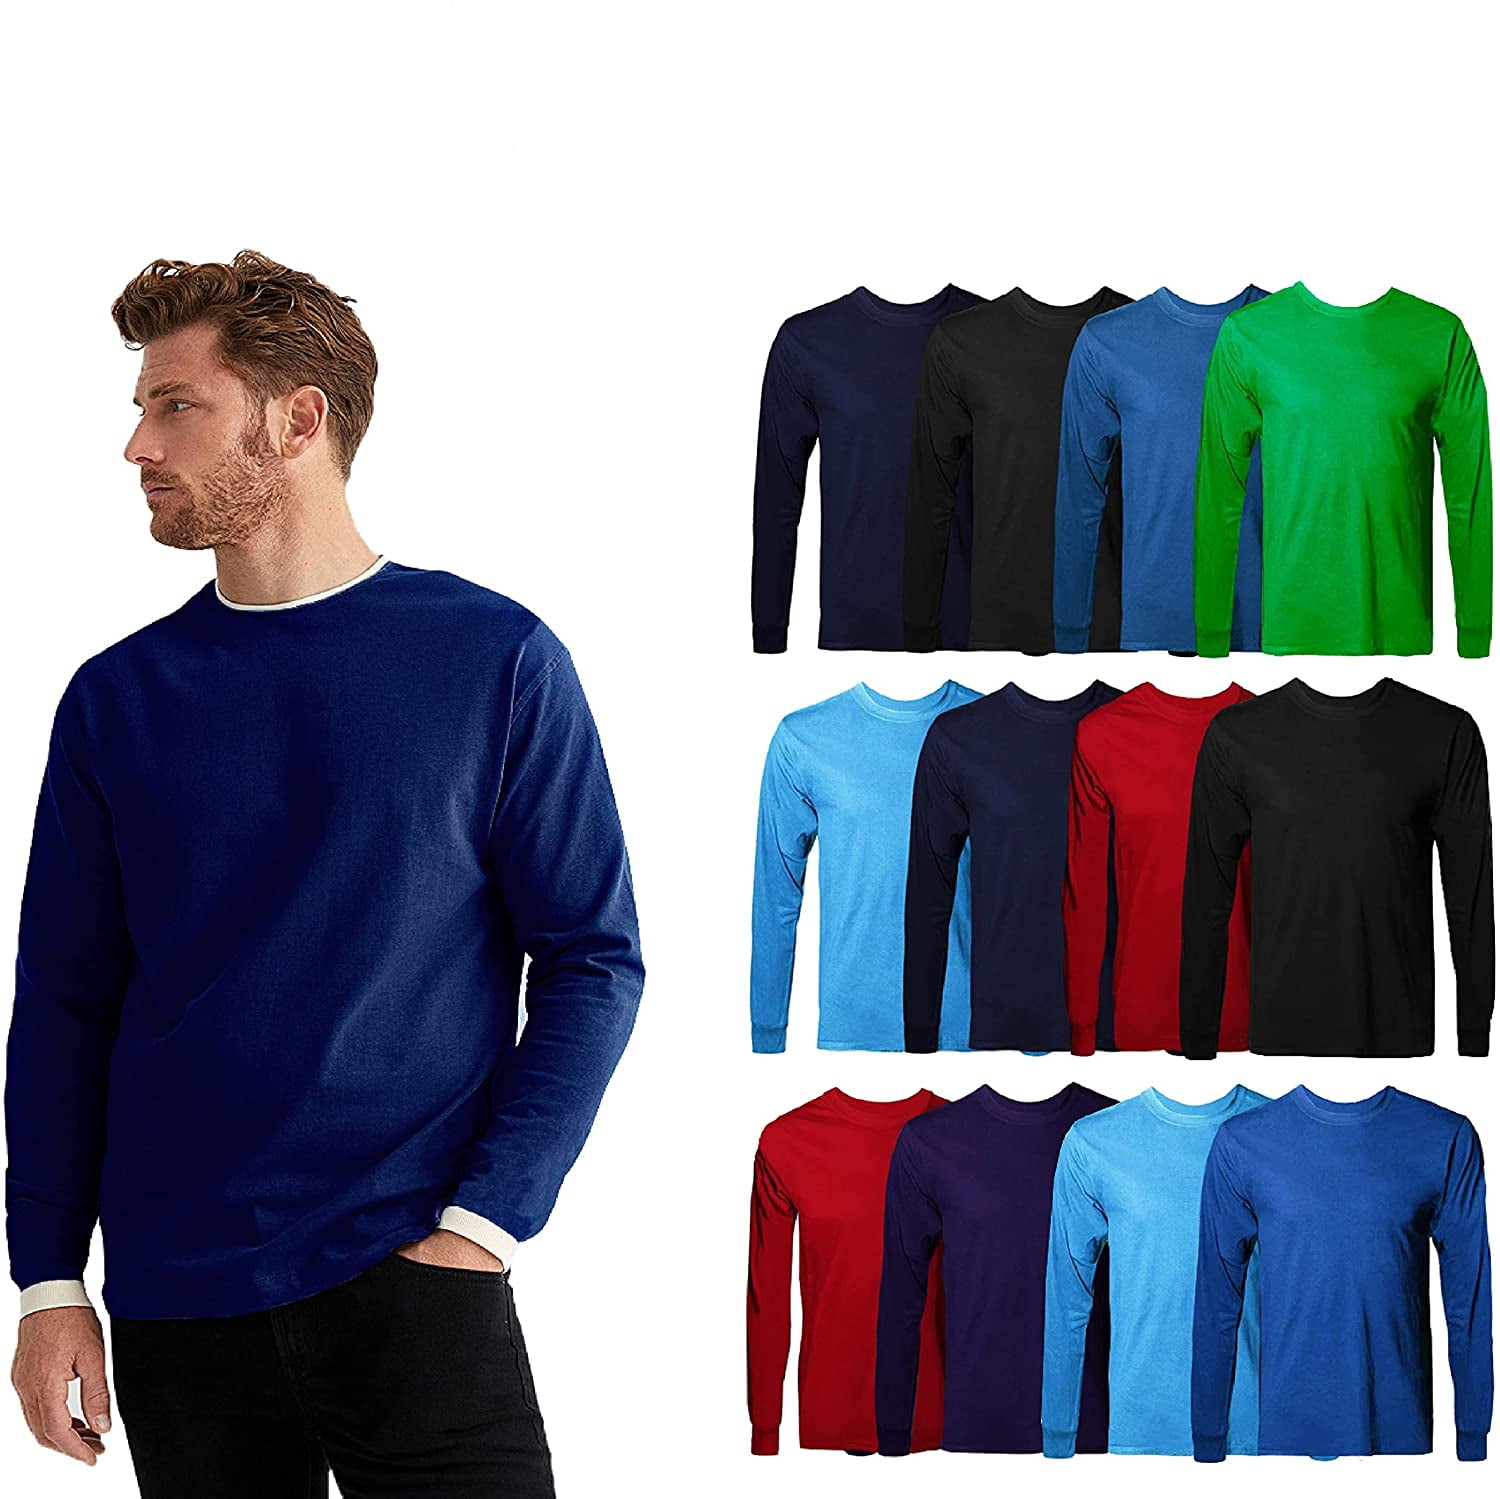 SOCKS'NBULK Mens Long Sleeve Colorful T-Shirts, Cotton Crew Neck Bulk Tees For Men, Wholesale Sleeved TShirt (12 Pack Long Sleeve, Small) - Walmart.com